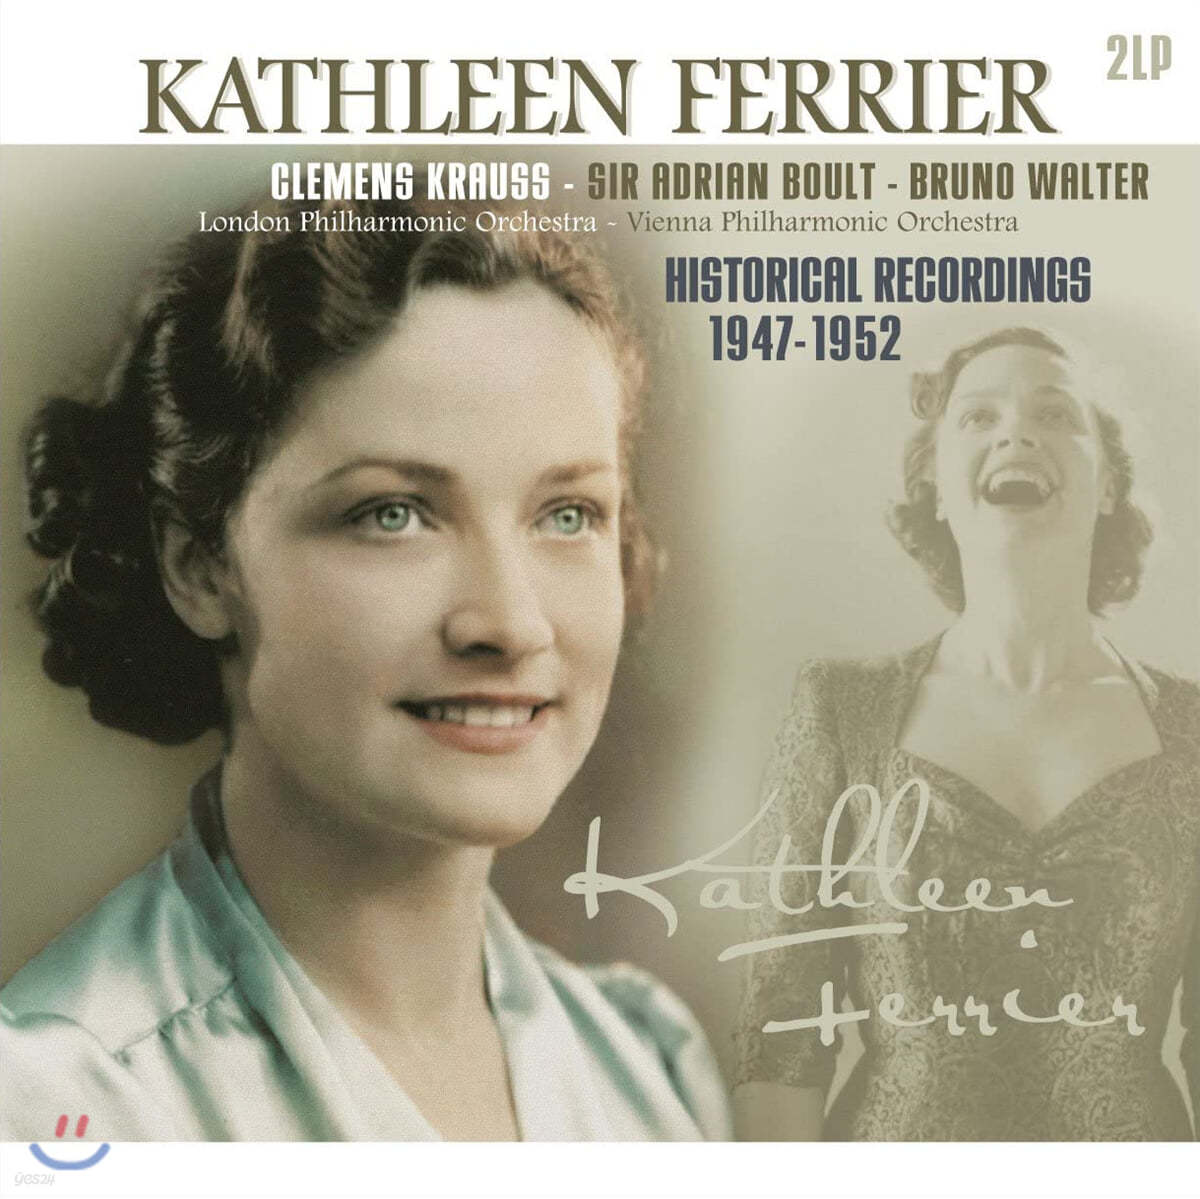 Kathleen Ferrier 캐슬린 페리어 1947-1952년 히스토리컬 레코딩 (Historical Recordings 1947-1952) [2LP]